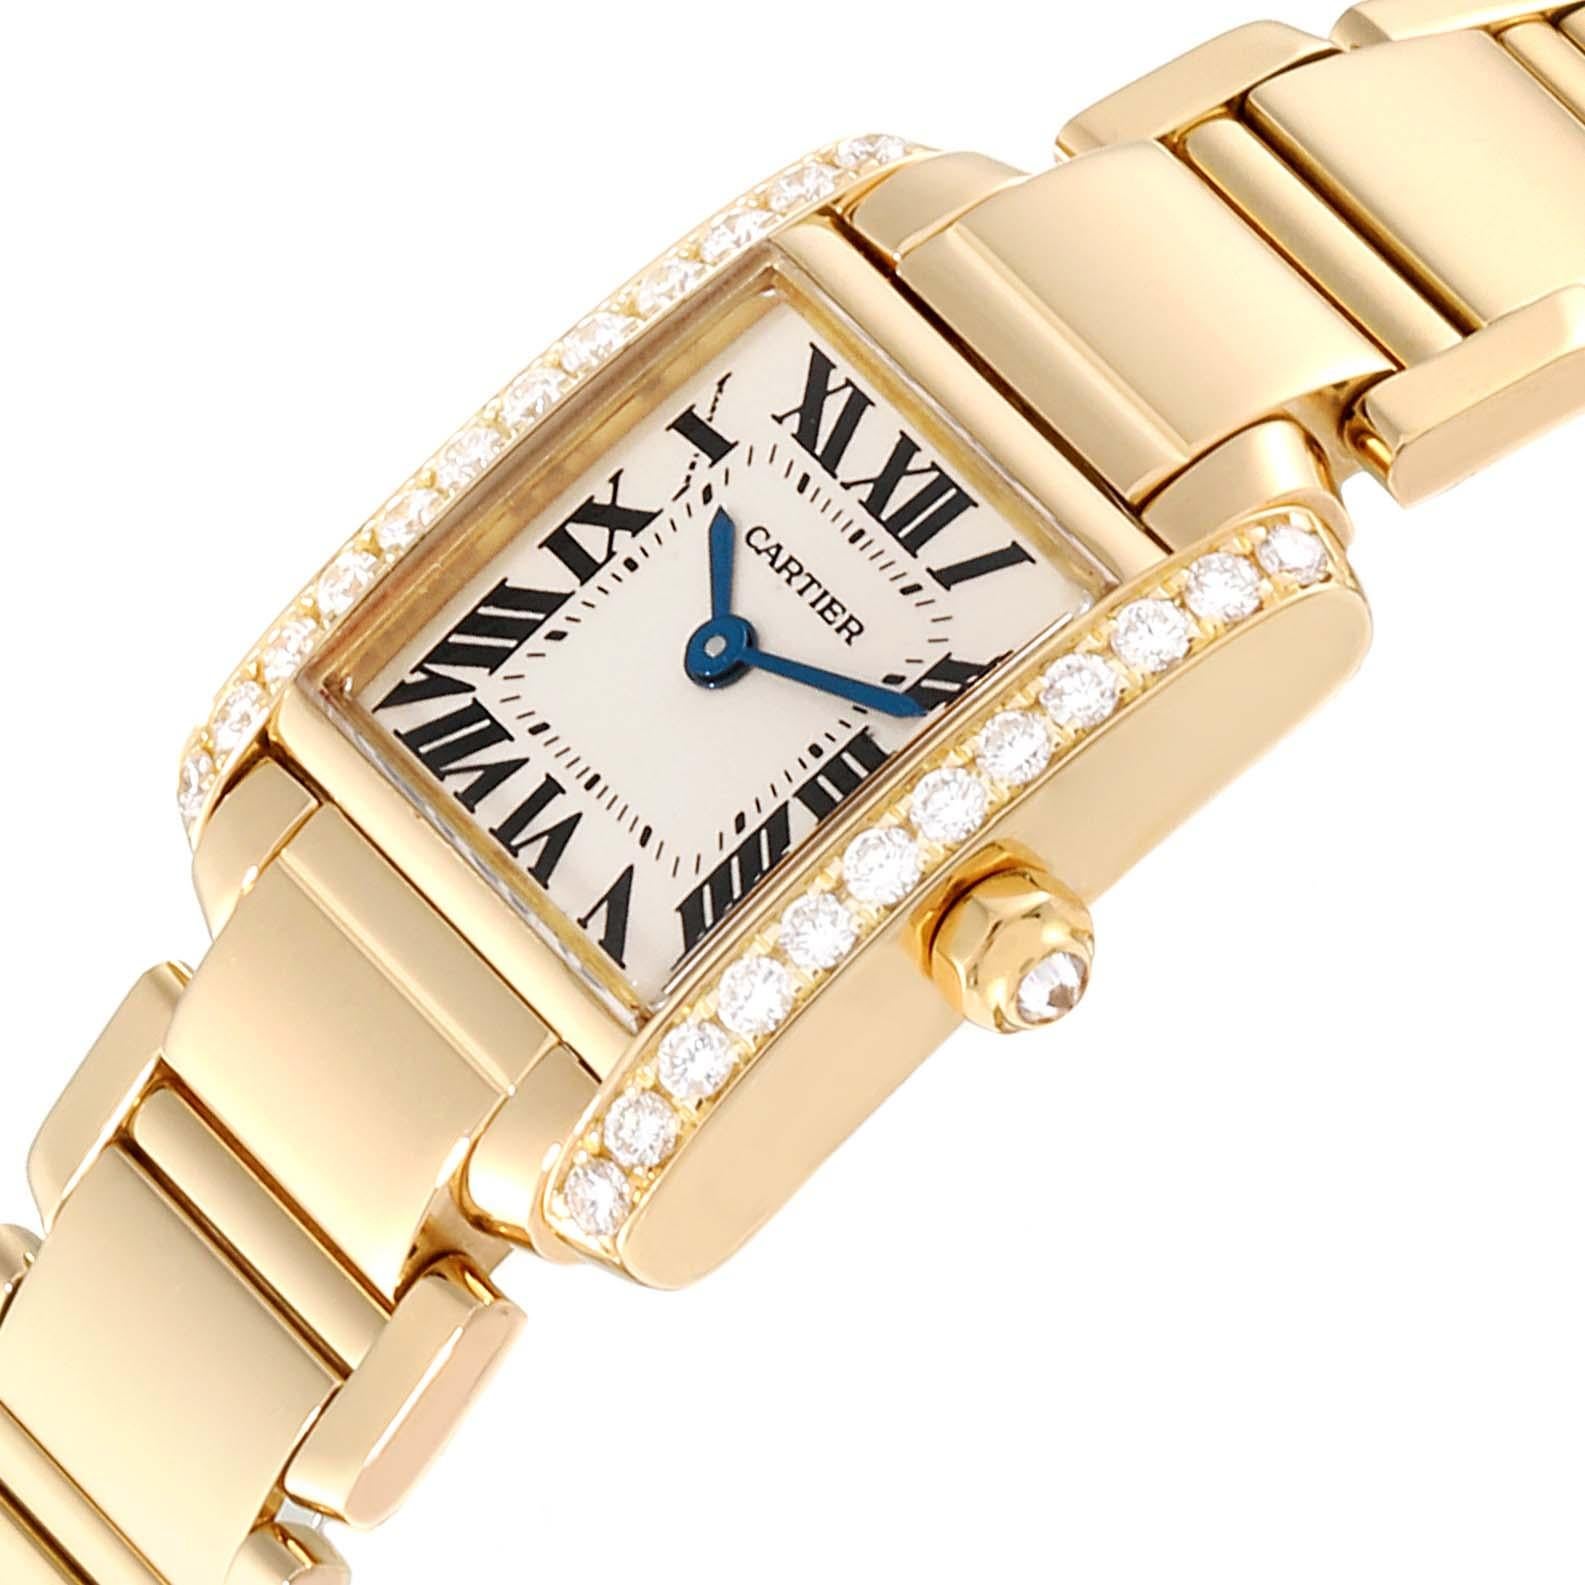 Cartier Tank Francaise 18 Karat Yellow Gold Diamond Ladies Watch WE1001R8 For Sale 1